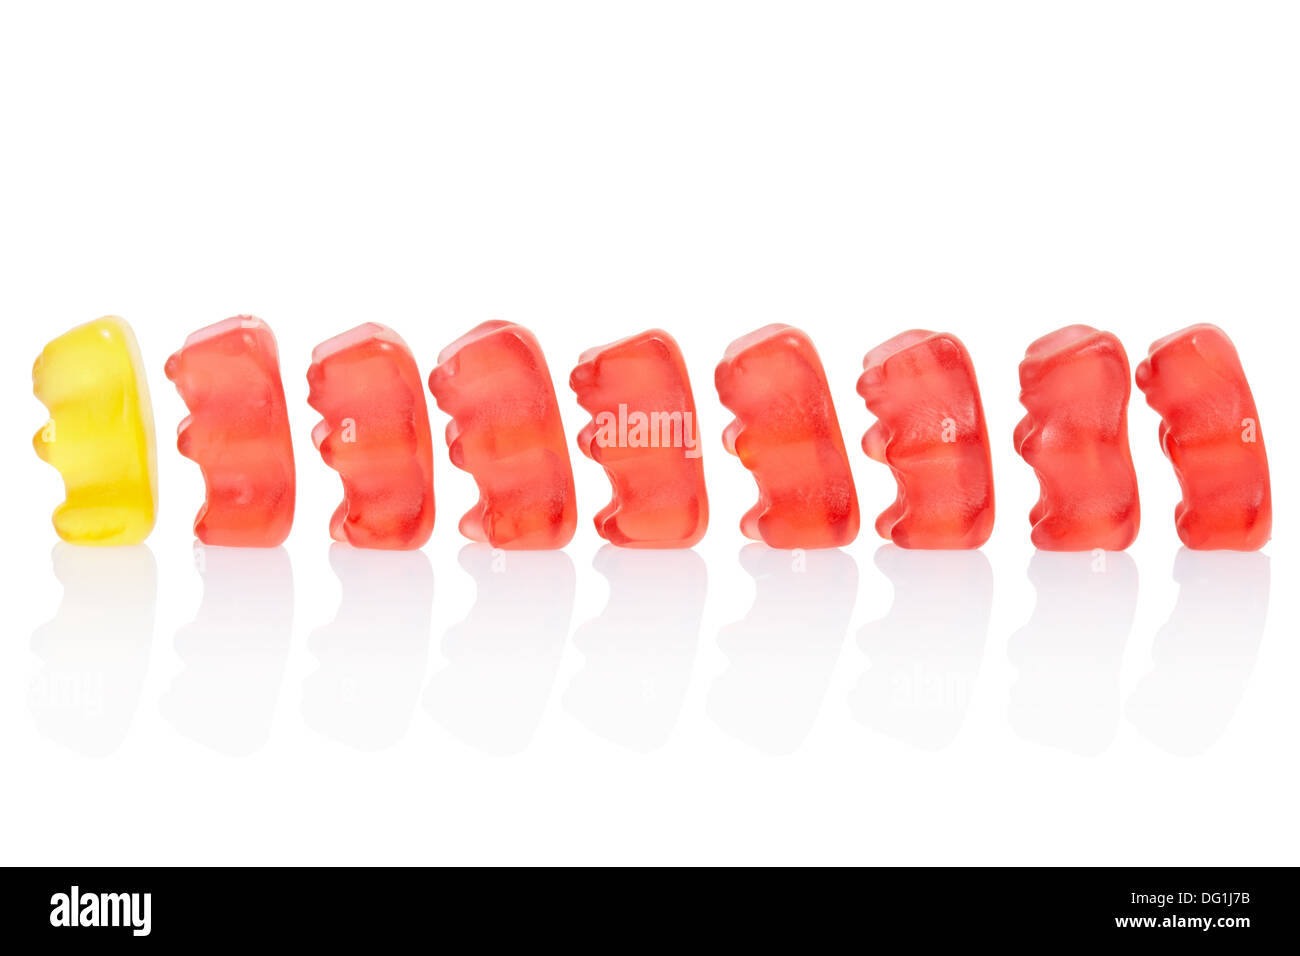 Gummy bears leadership concept Stock Photo